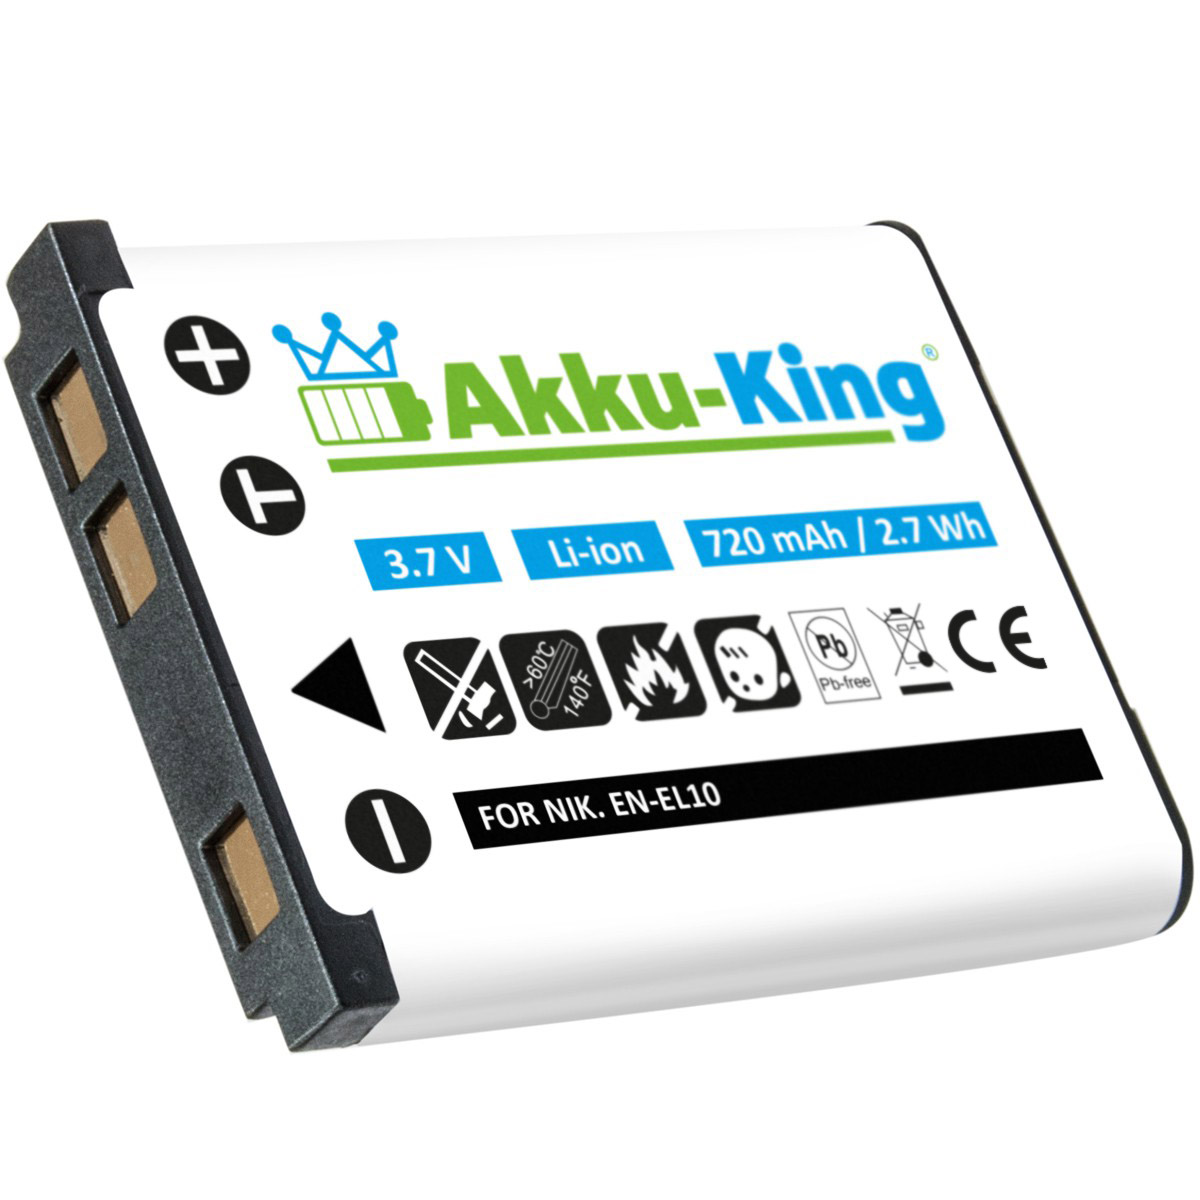 kompatibel 3.7 Volt, EN-EL10 720mAh Kamera-Akku, Nikon Li-Ion mit Akku AKKU-KING